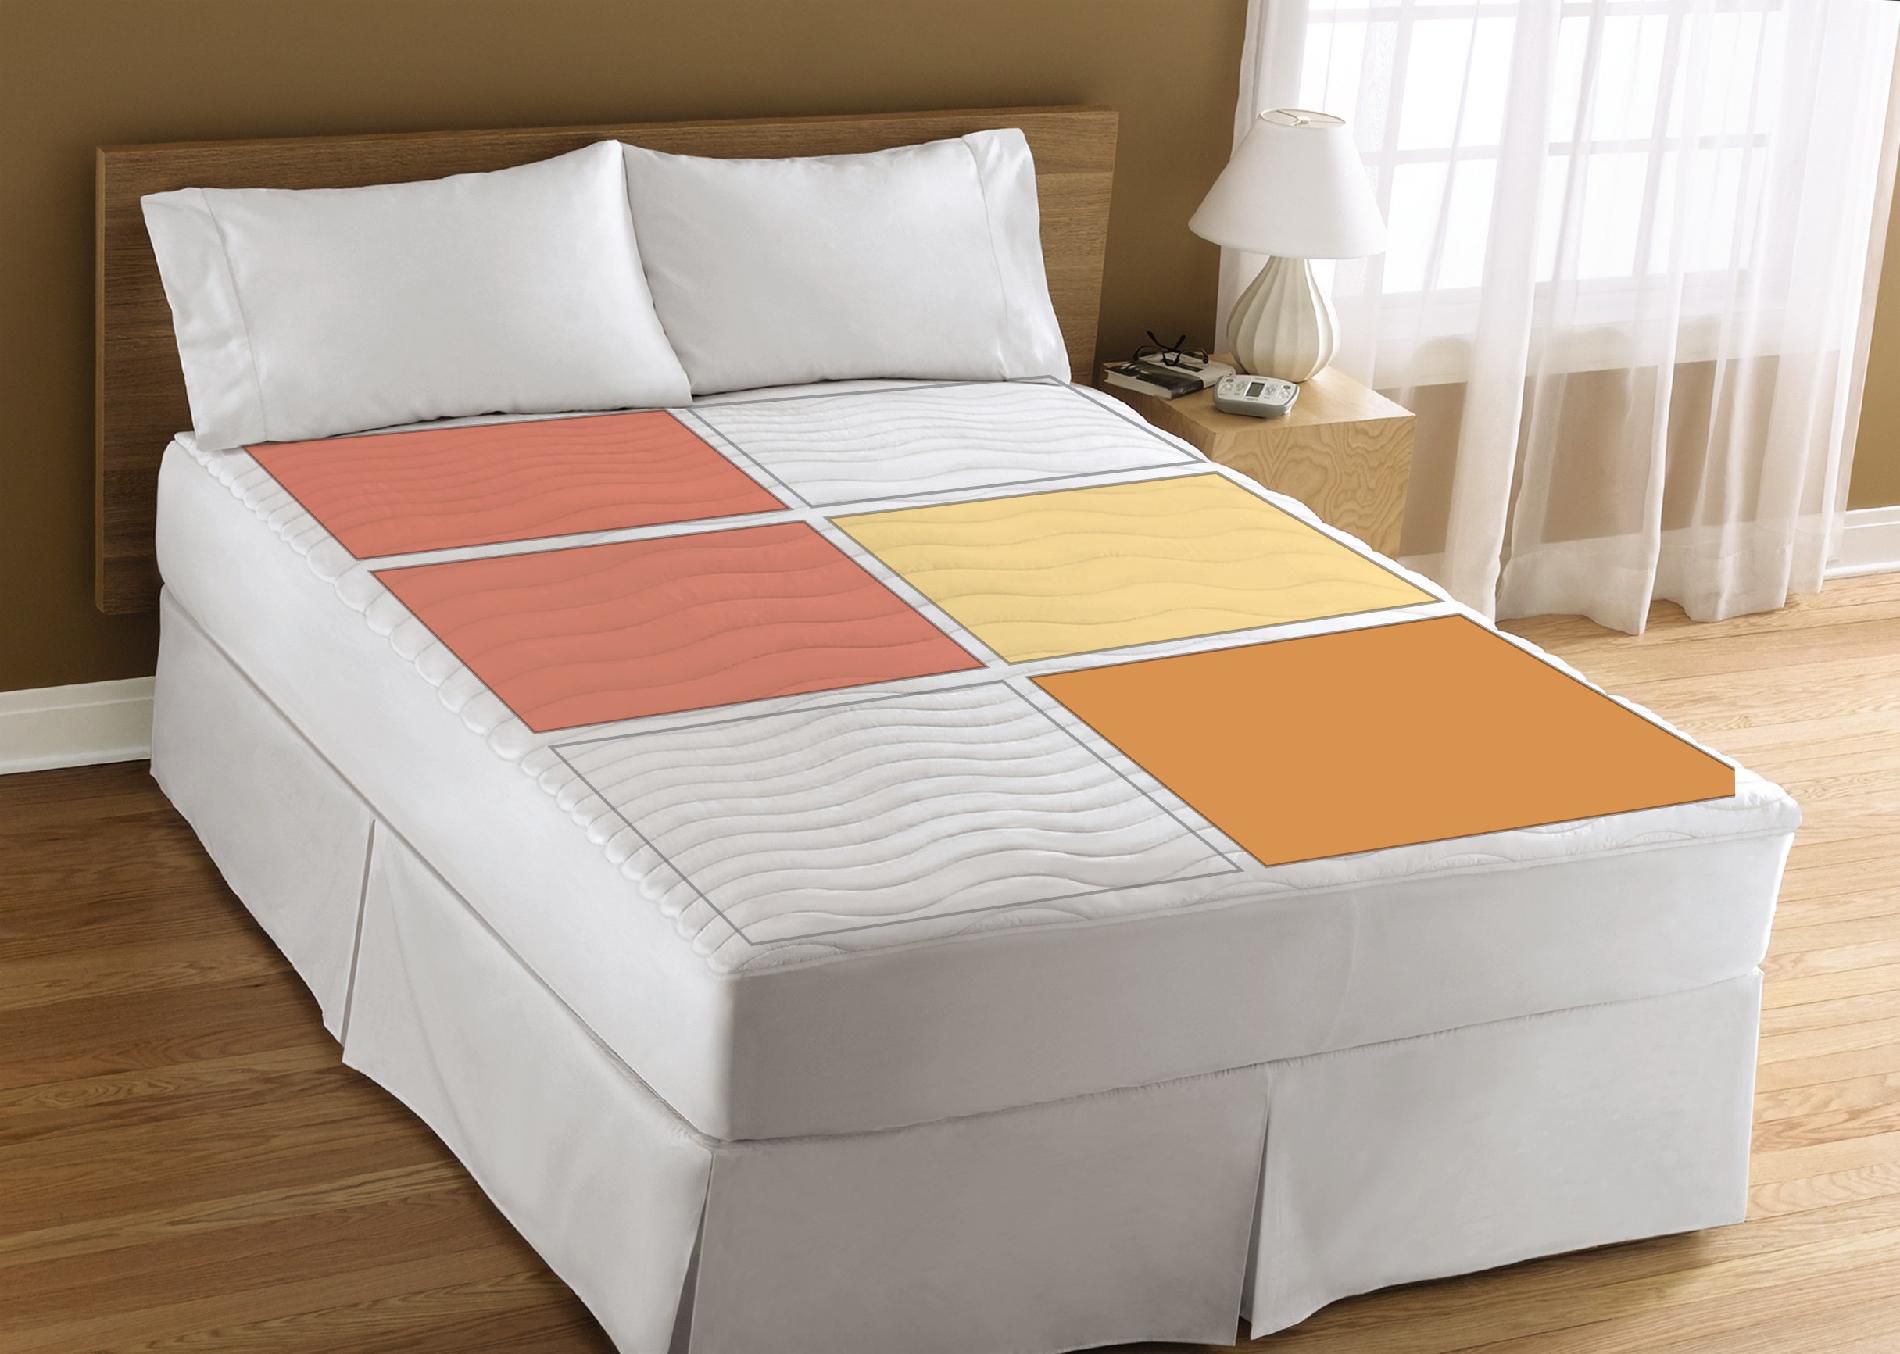 troubleshoot a sunbeam electric mattress pad